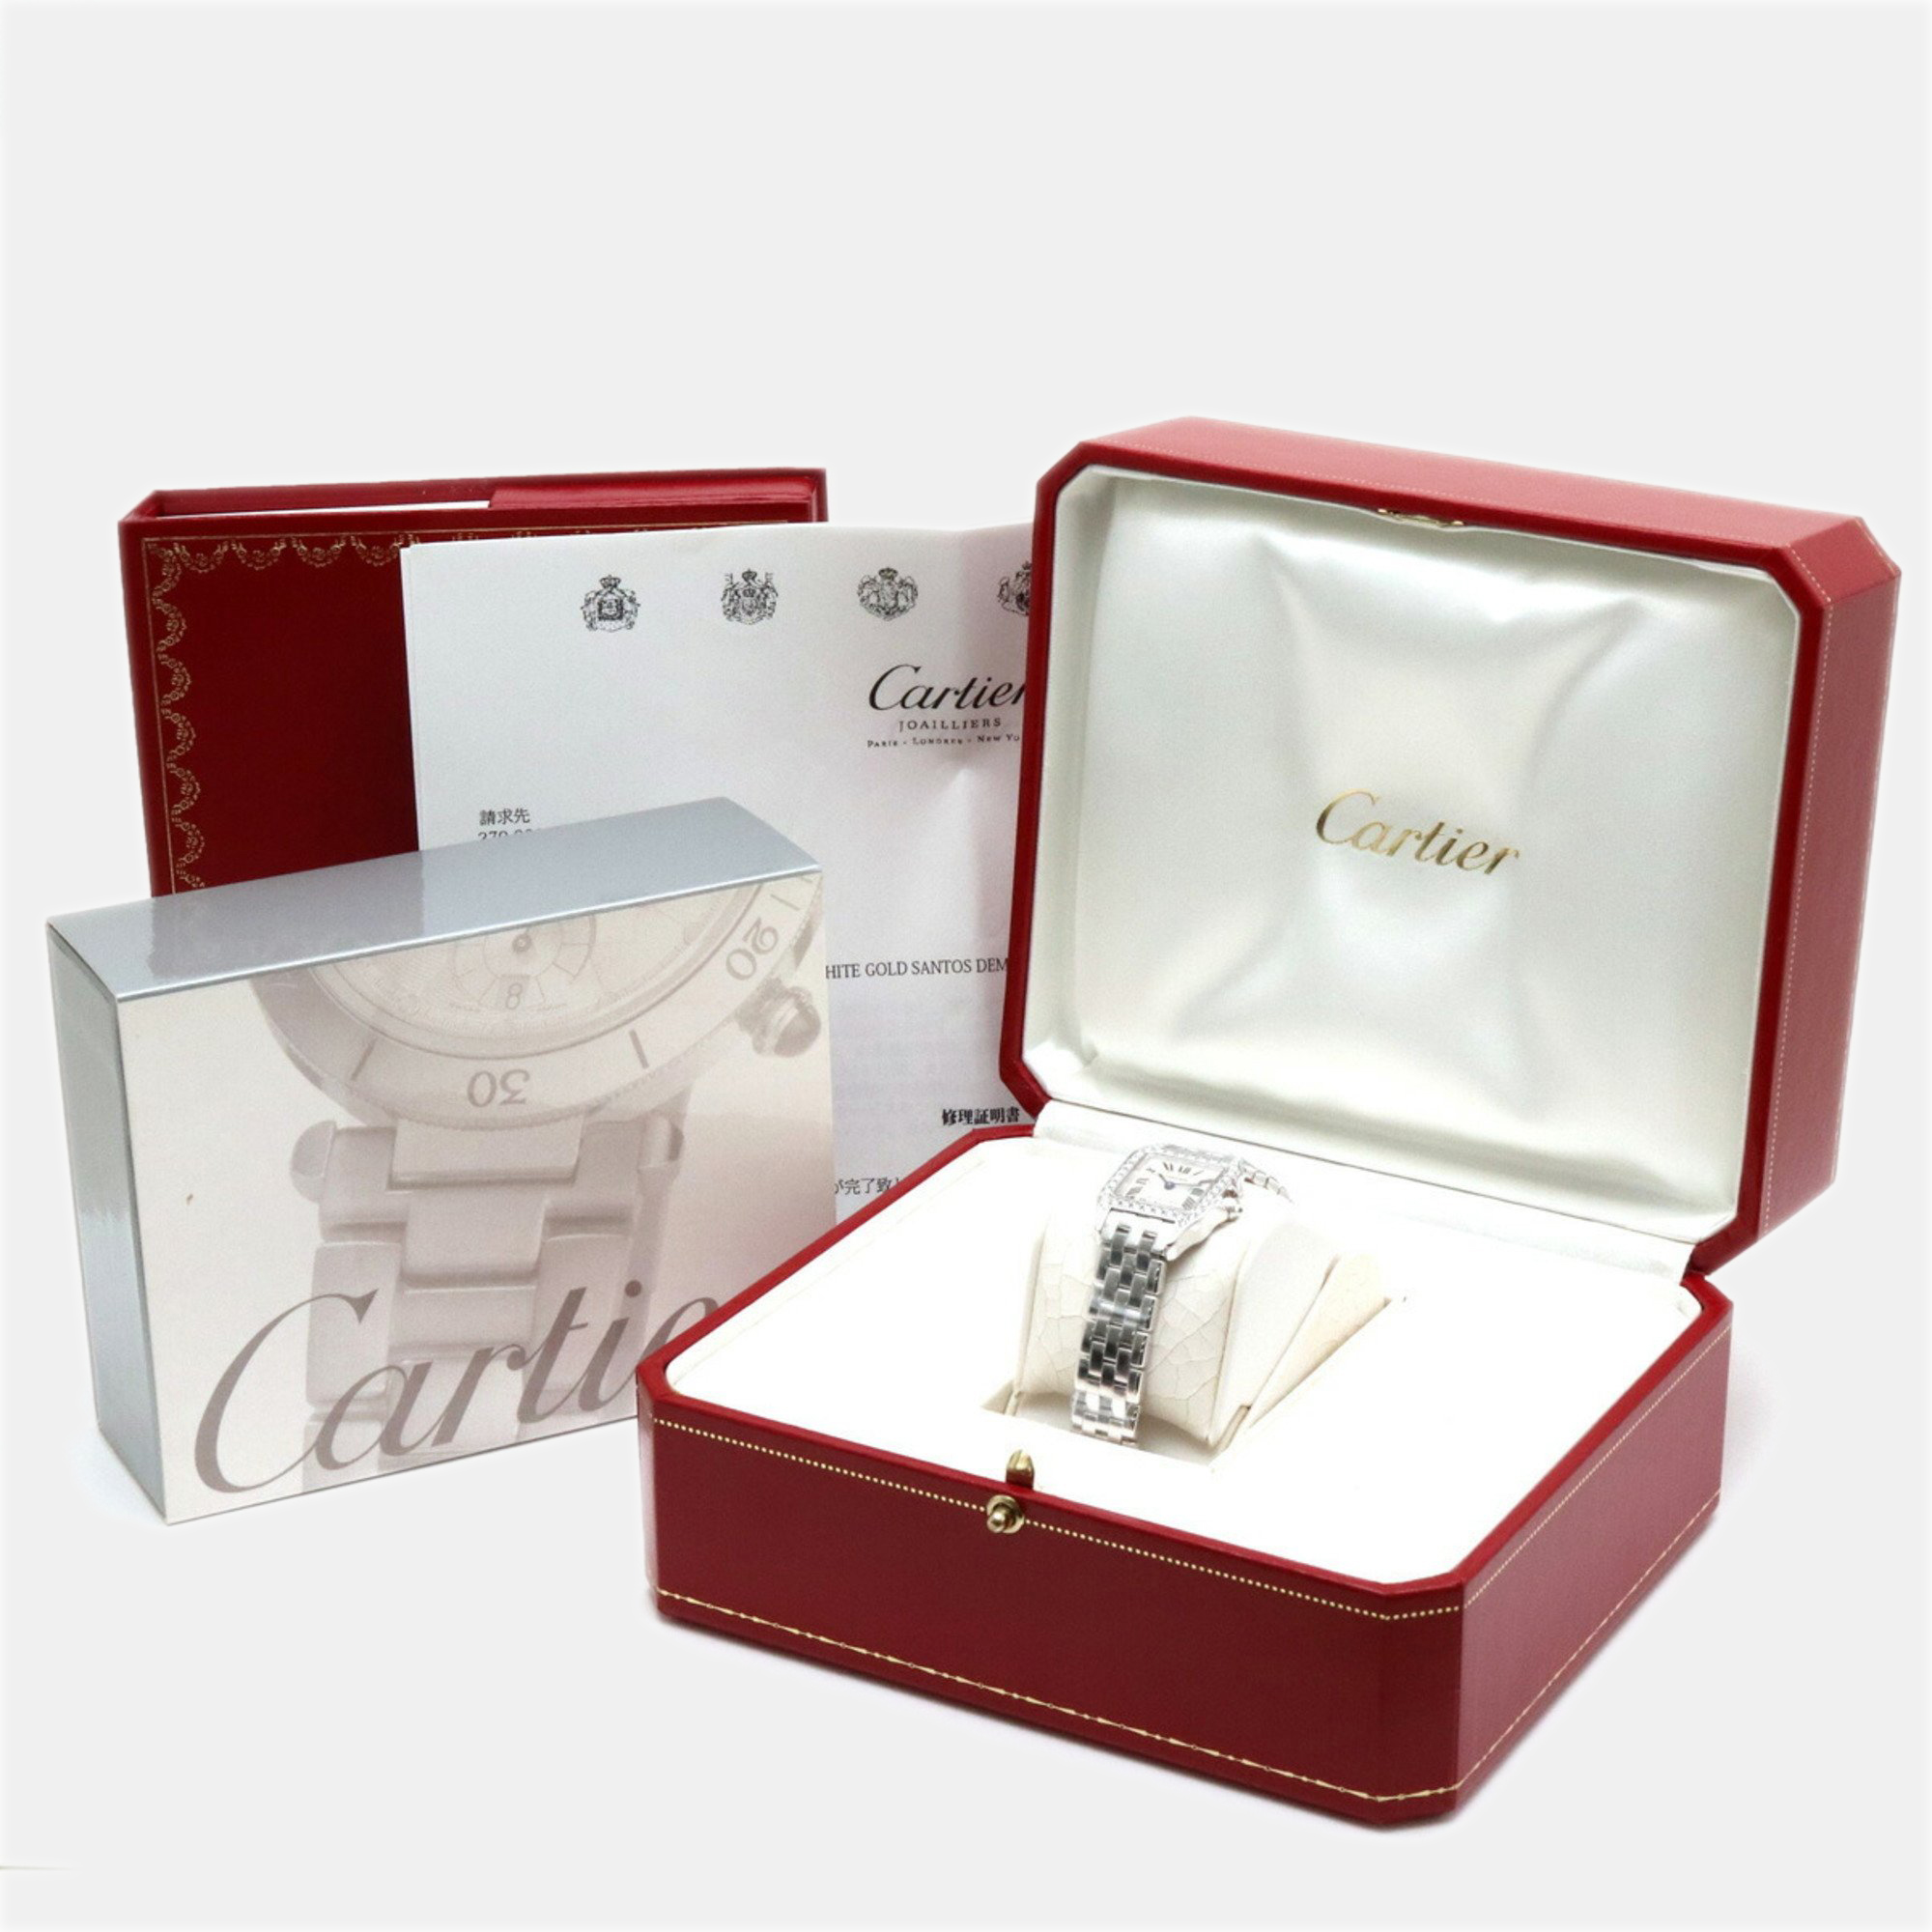 Cartier Silver Diamond 18k White Gold Santos Demoiselle WF9003Y8 Quartz Women's Wristwatch 20 Mm